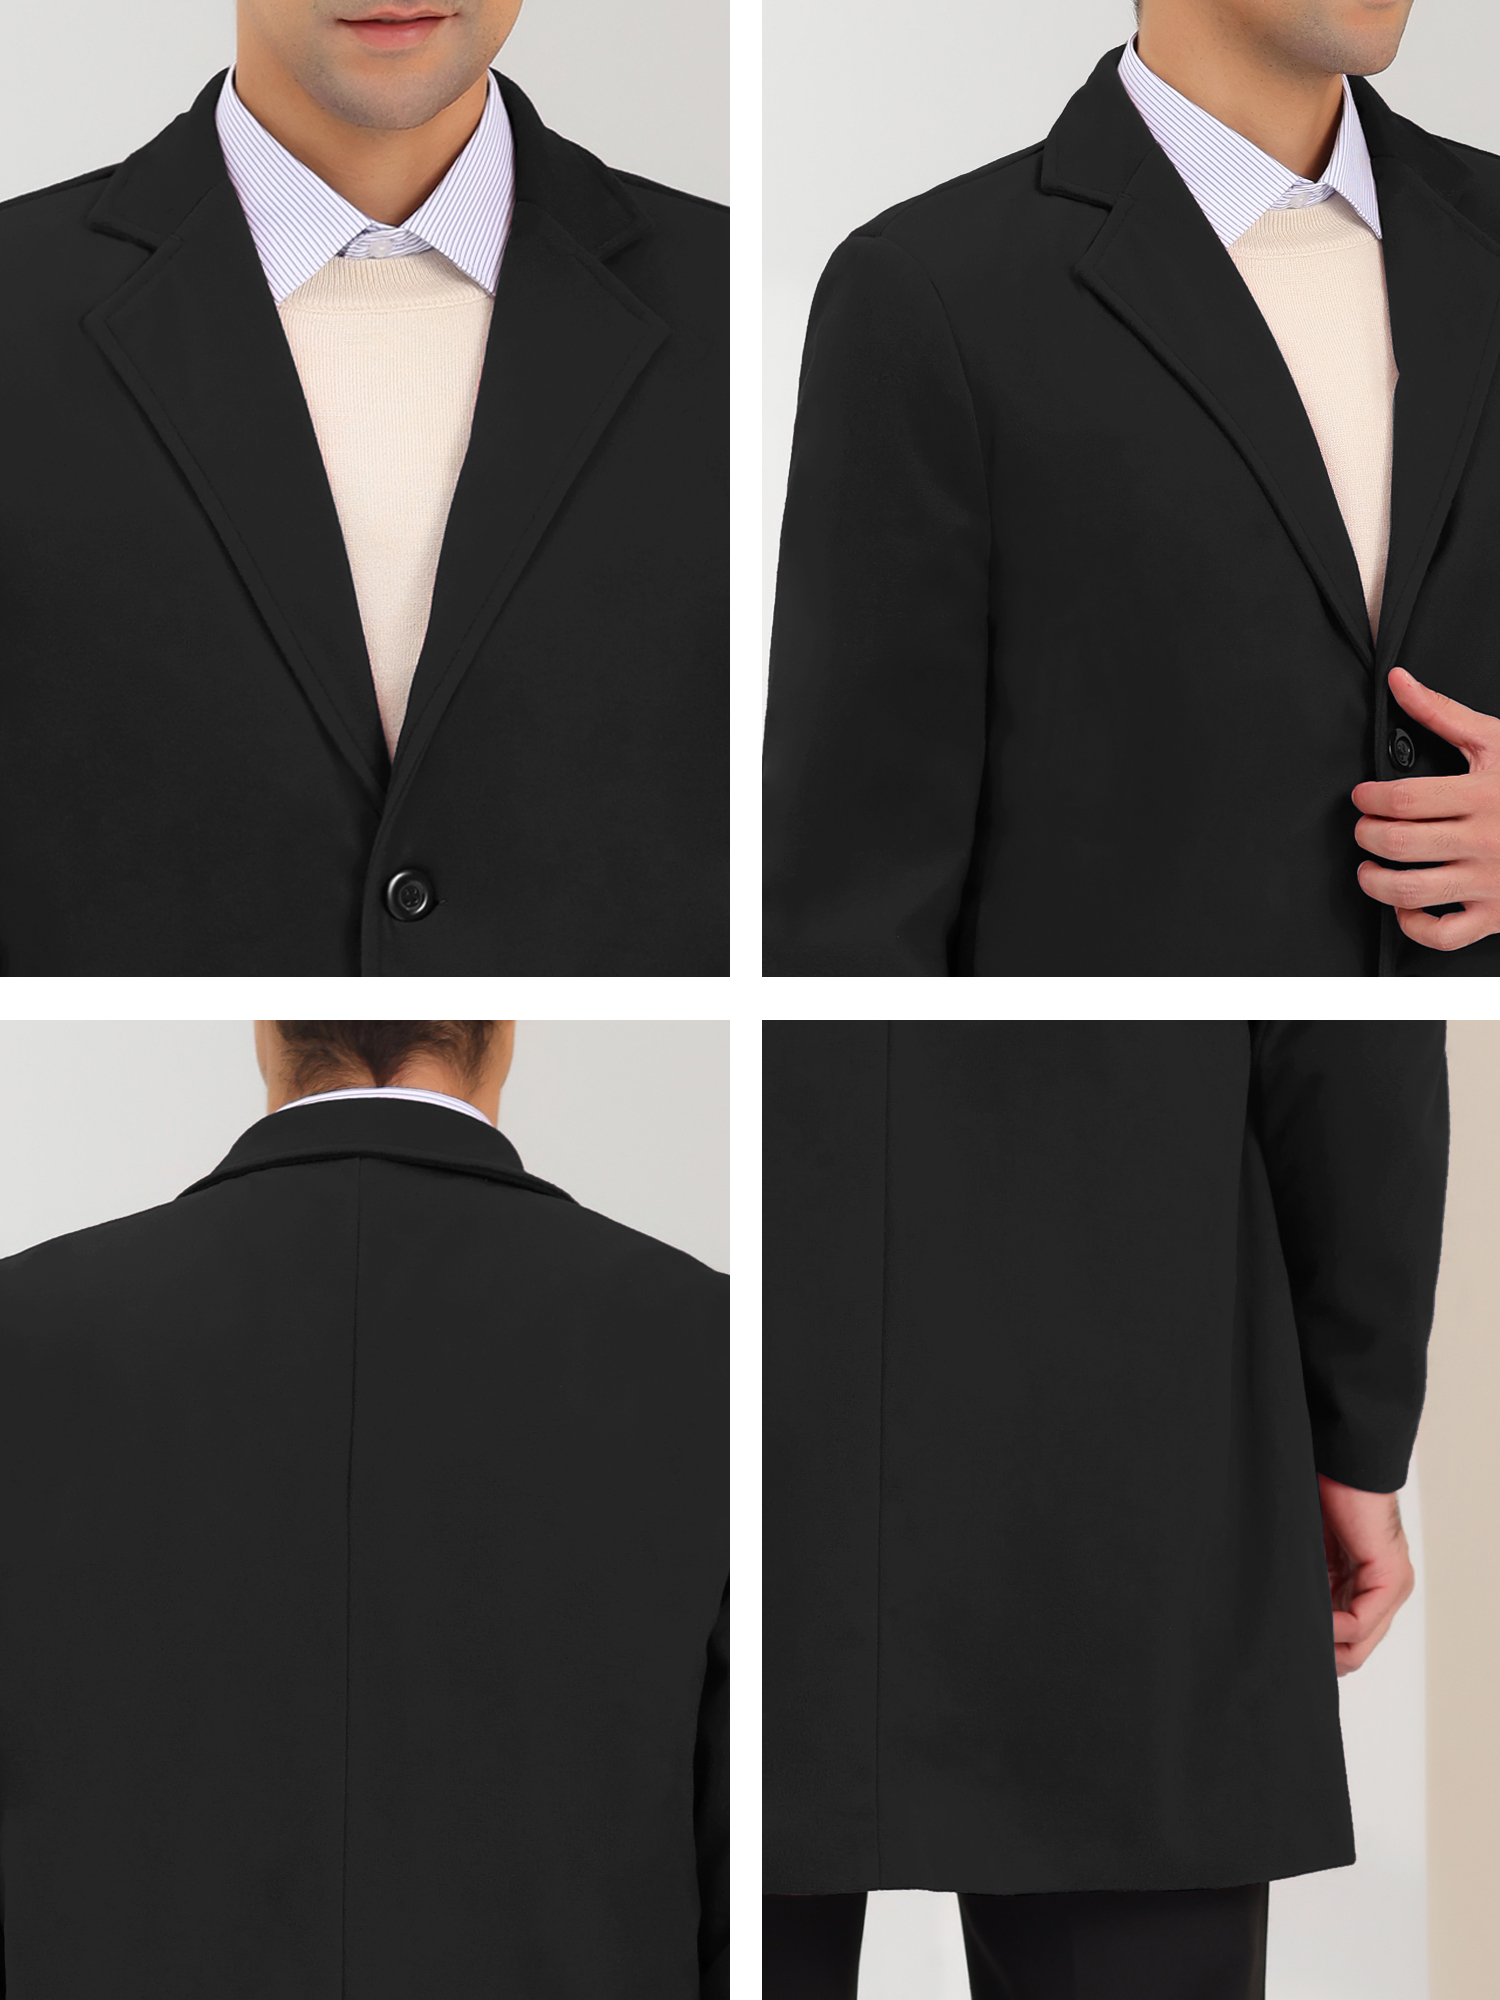 Unique Bargains Lars Amadeus Men's Trench Coat Single Breasted Classic Long Overcoat